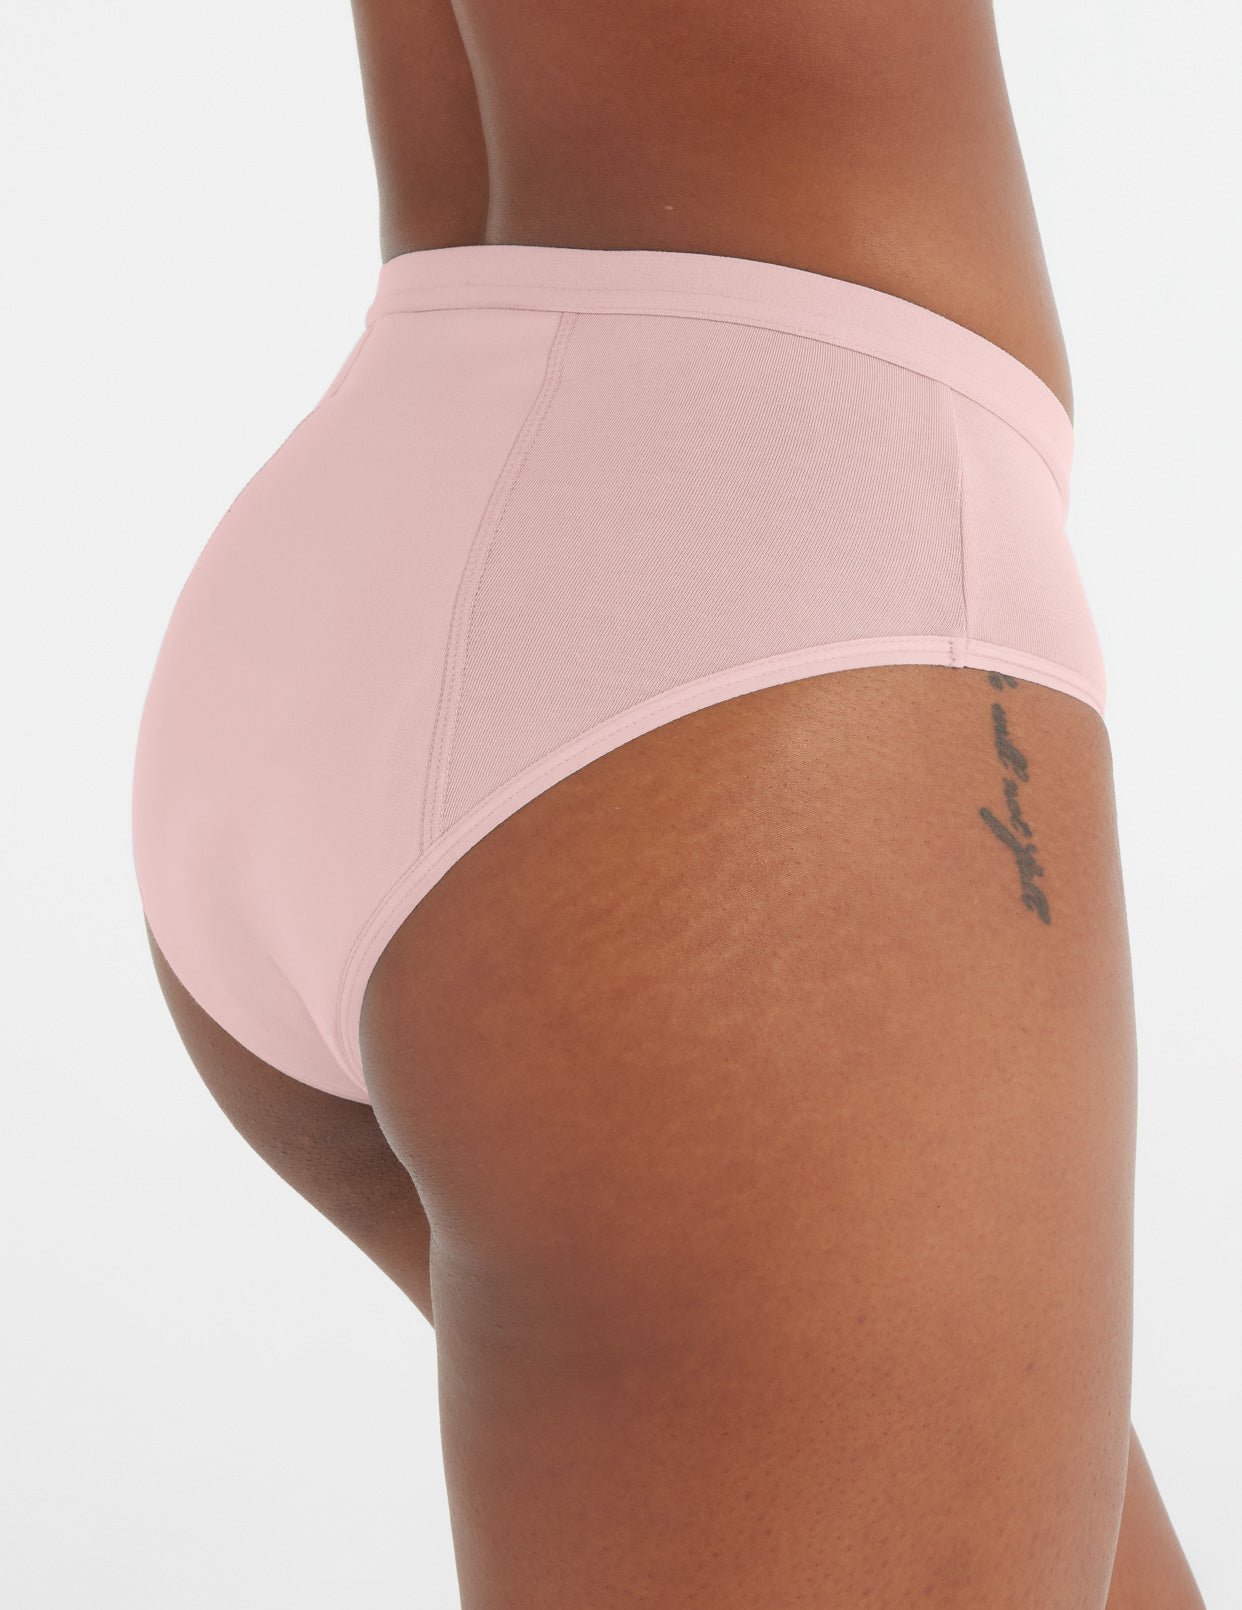 KNIX Cotton Super Leakproof Boxer Brief - Period Underwear for